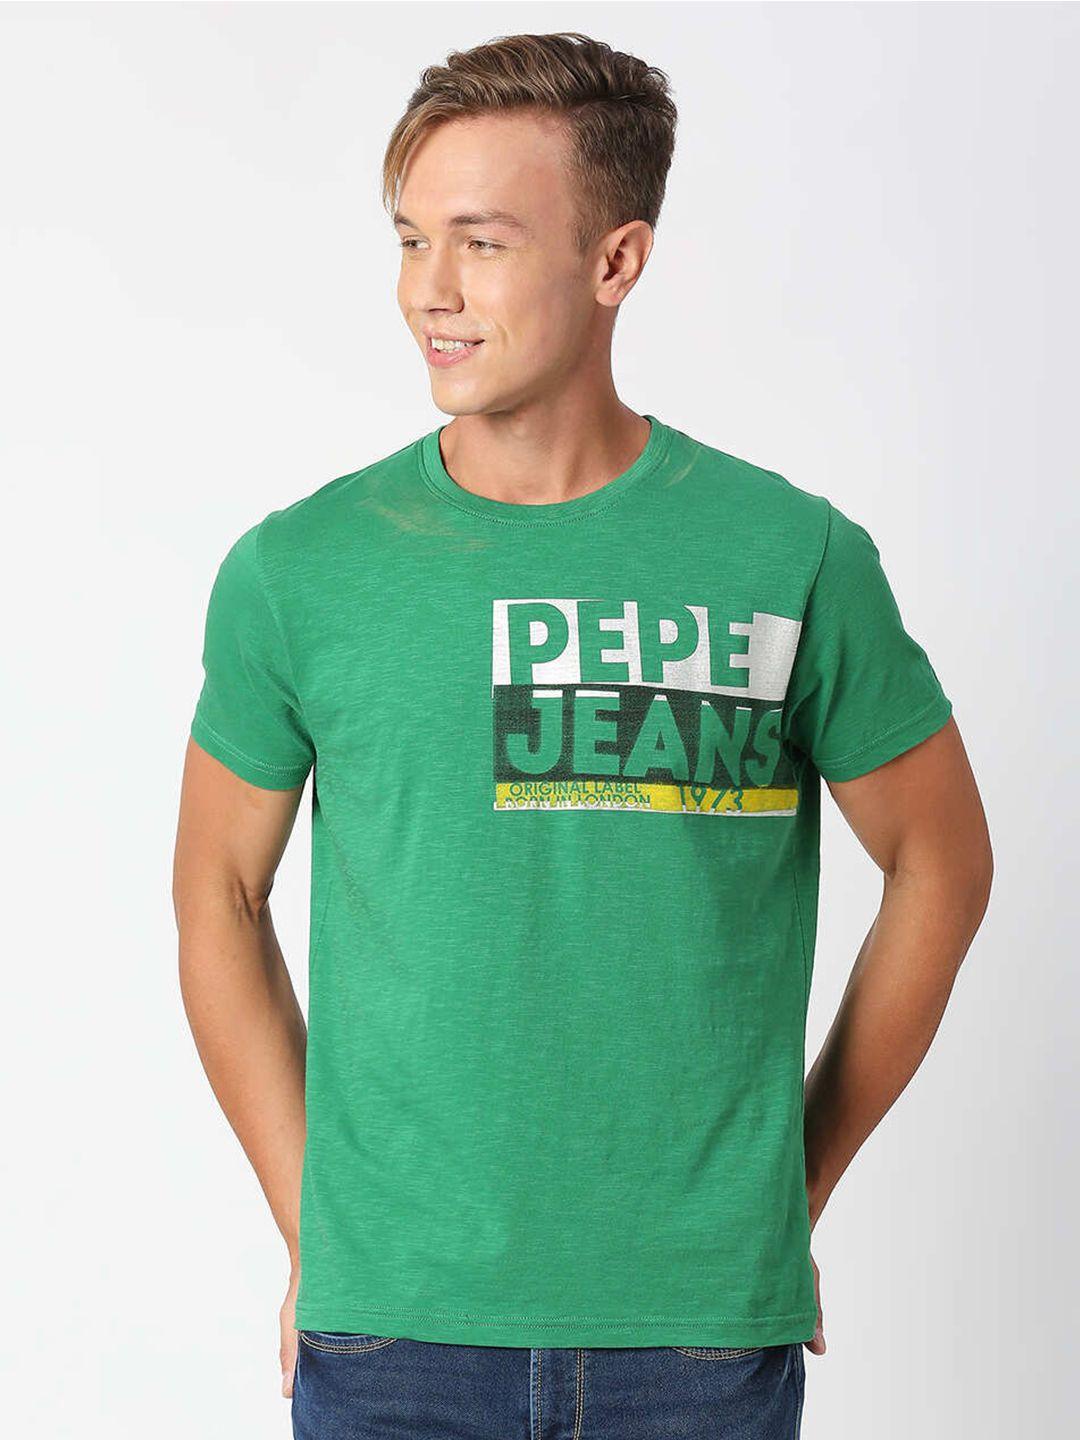 pepe jeans men green & white brand logo printed slim fit t-shirt